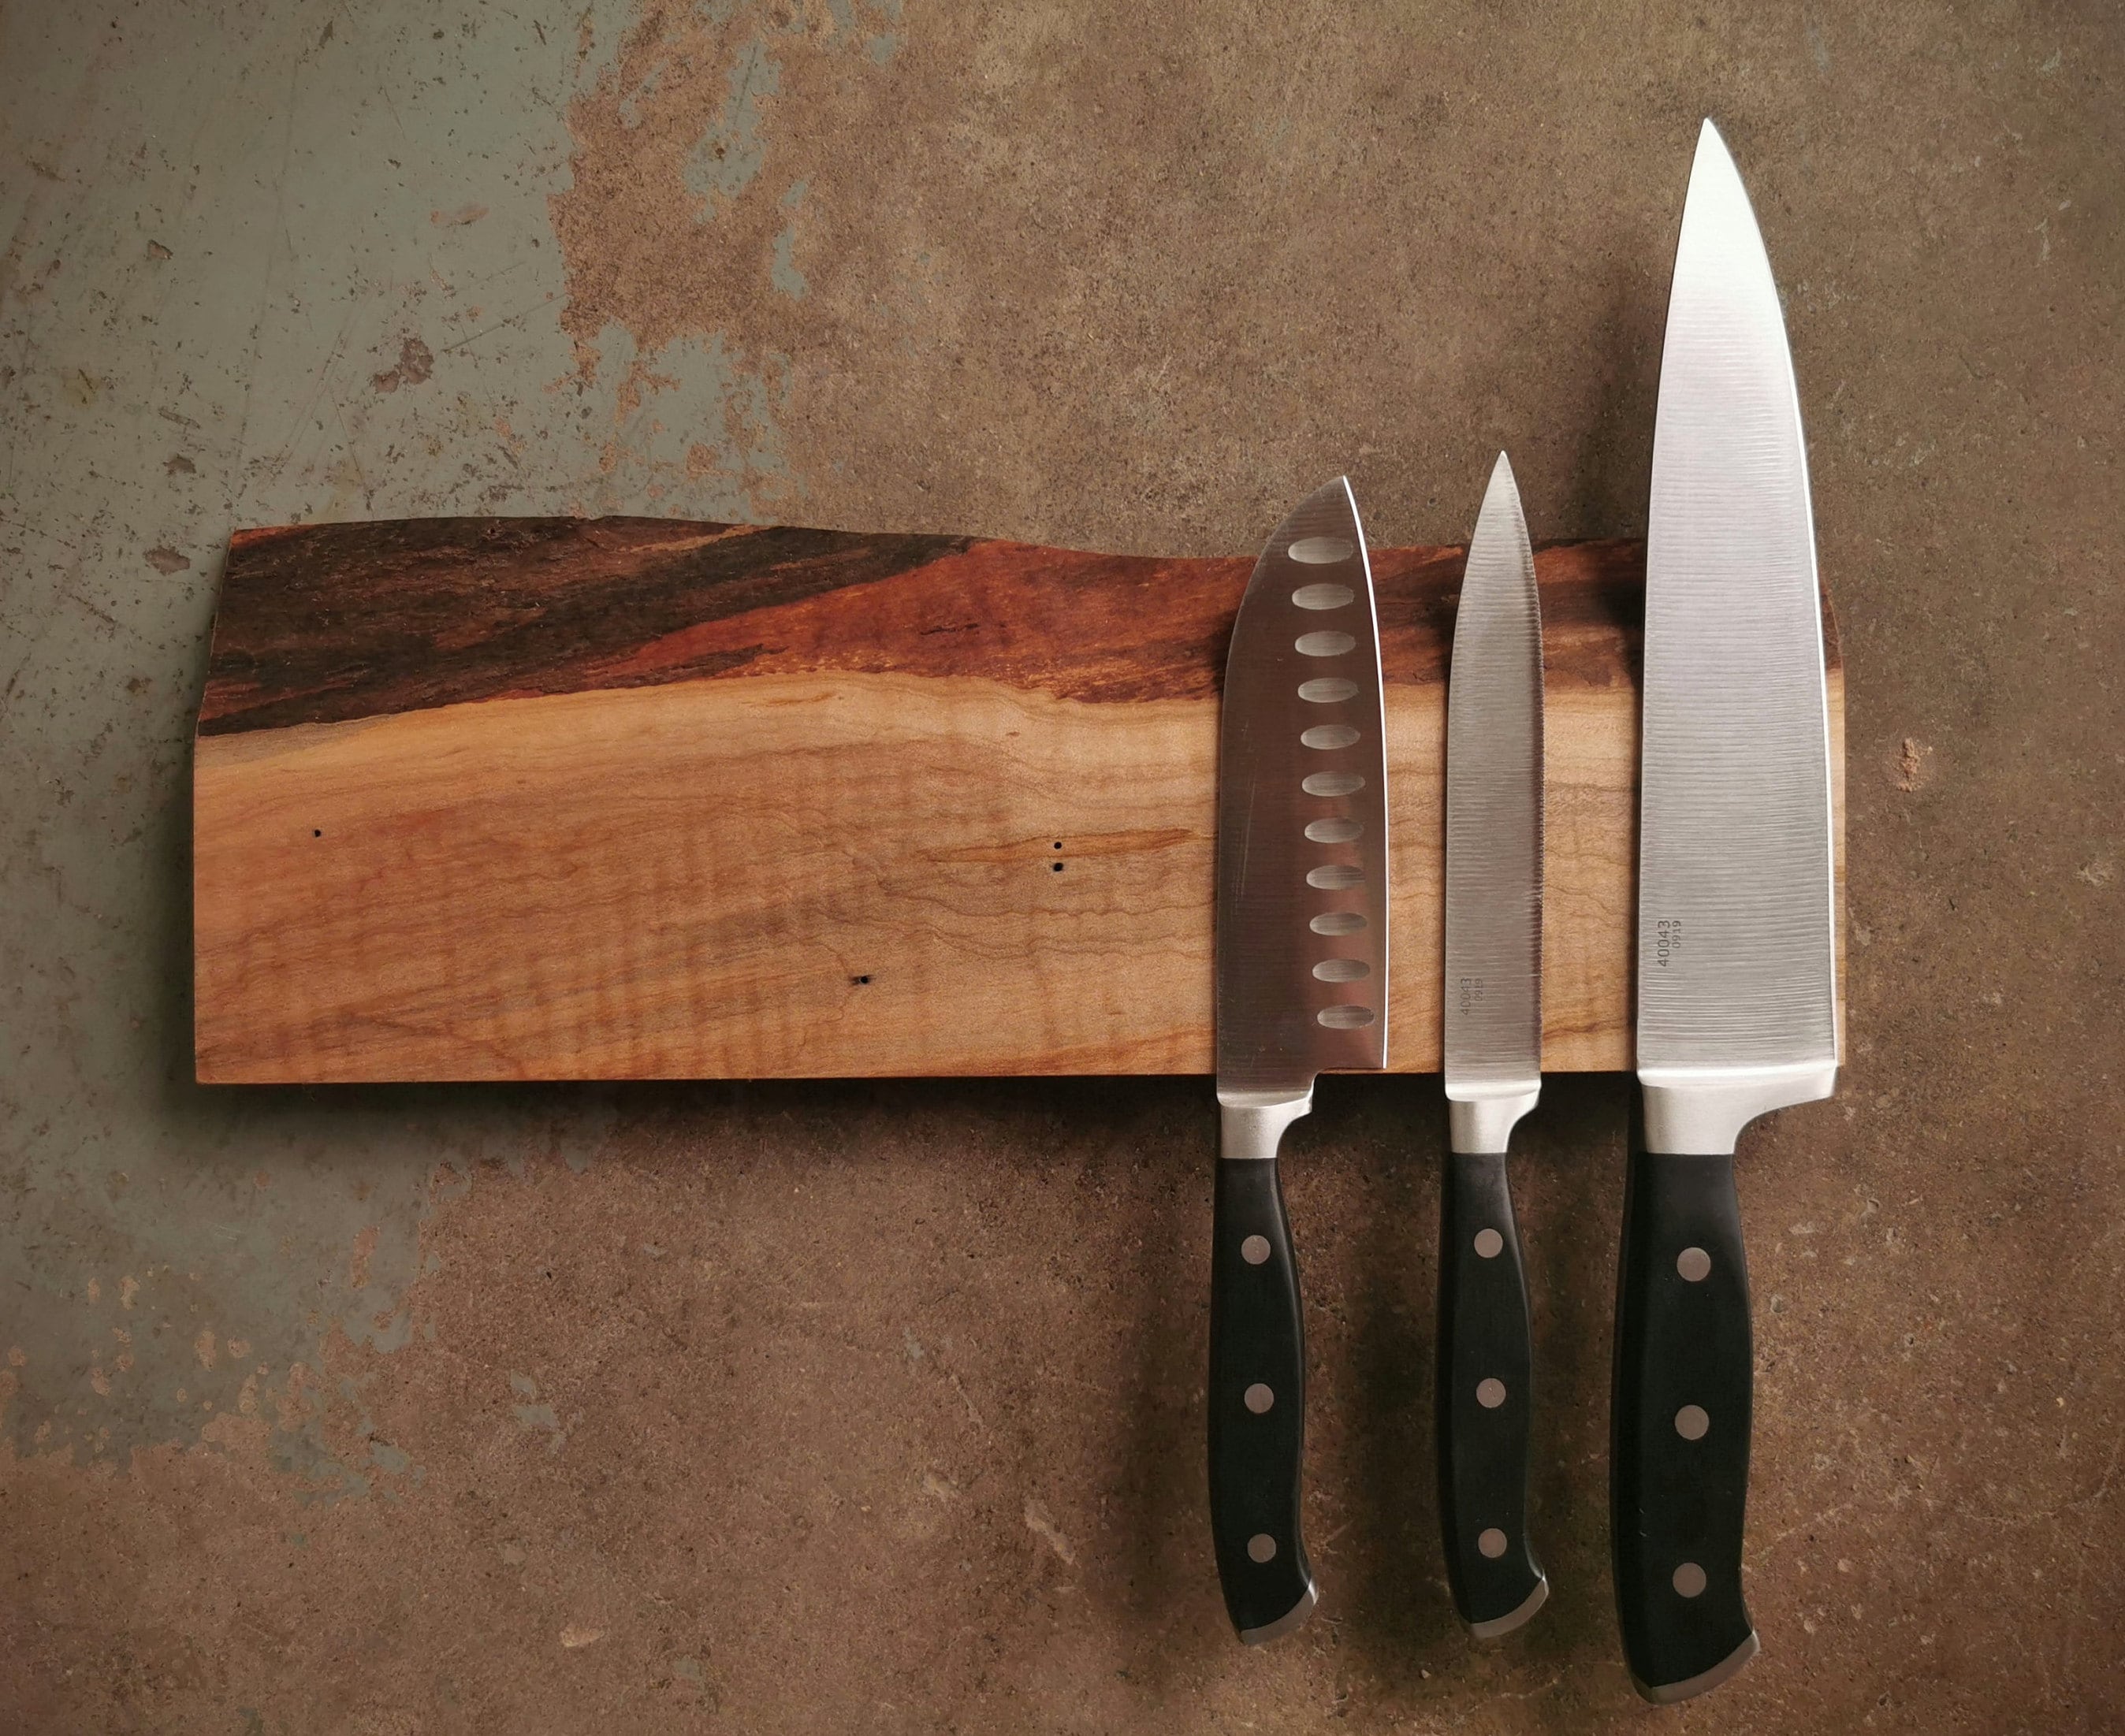 20 wooden magnetic bar for kitchen knives storage